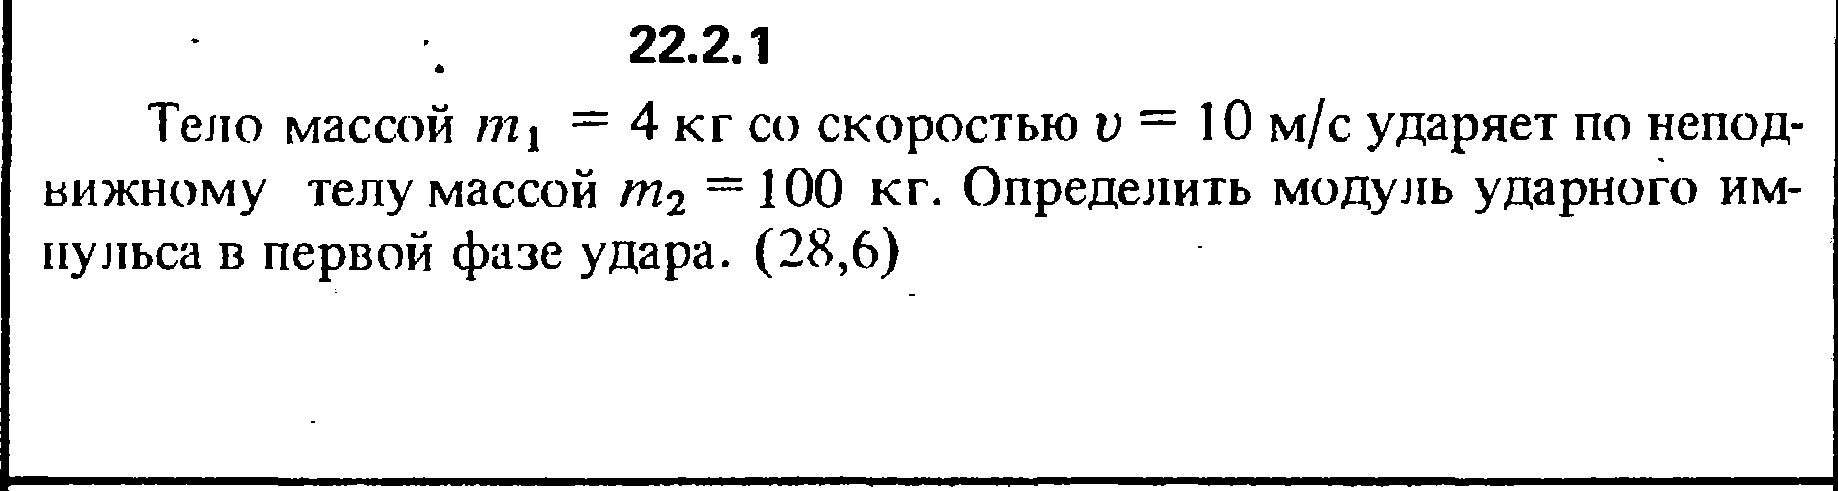 Решение 22.2.1 из сборника (решебника) Кепе О.Е. 19